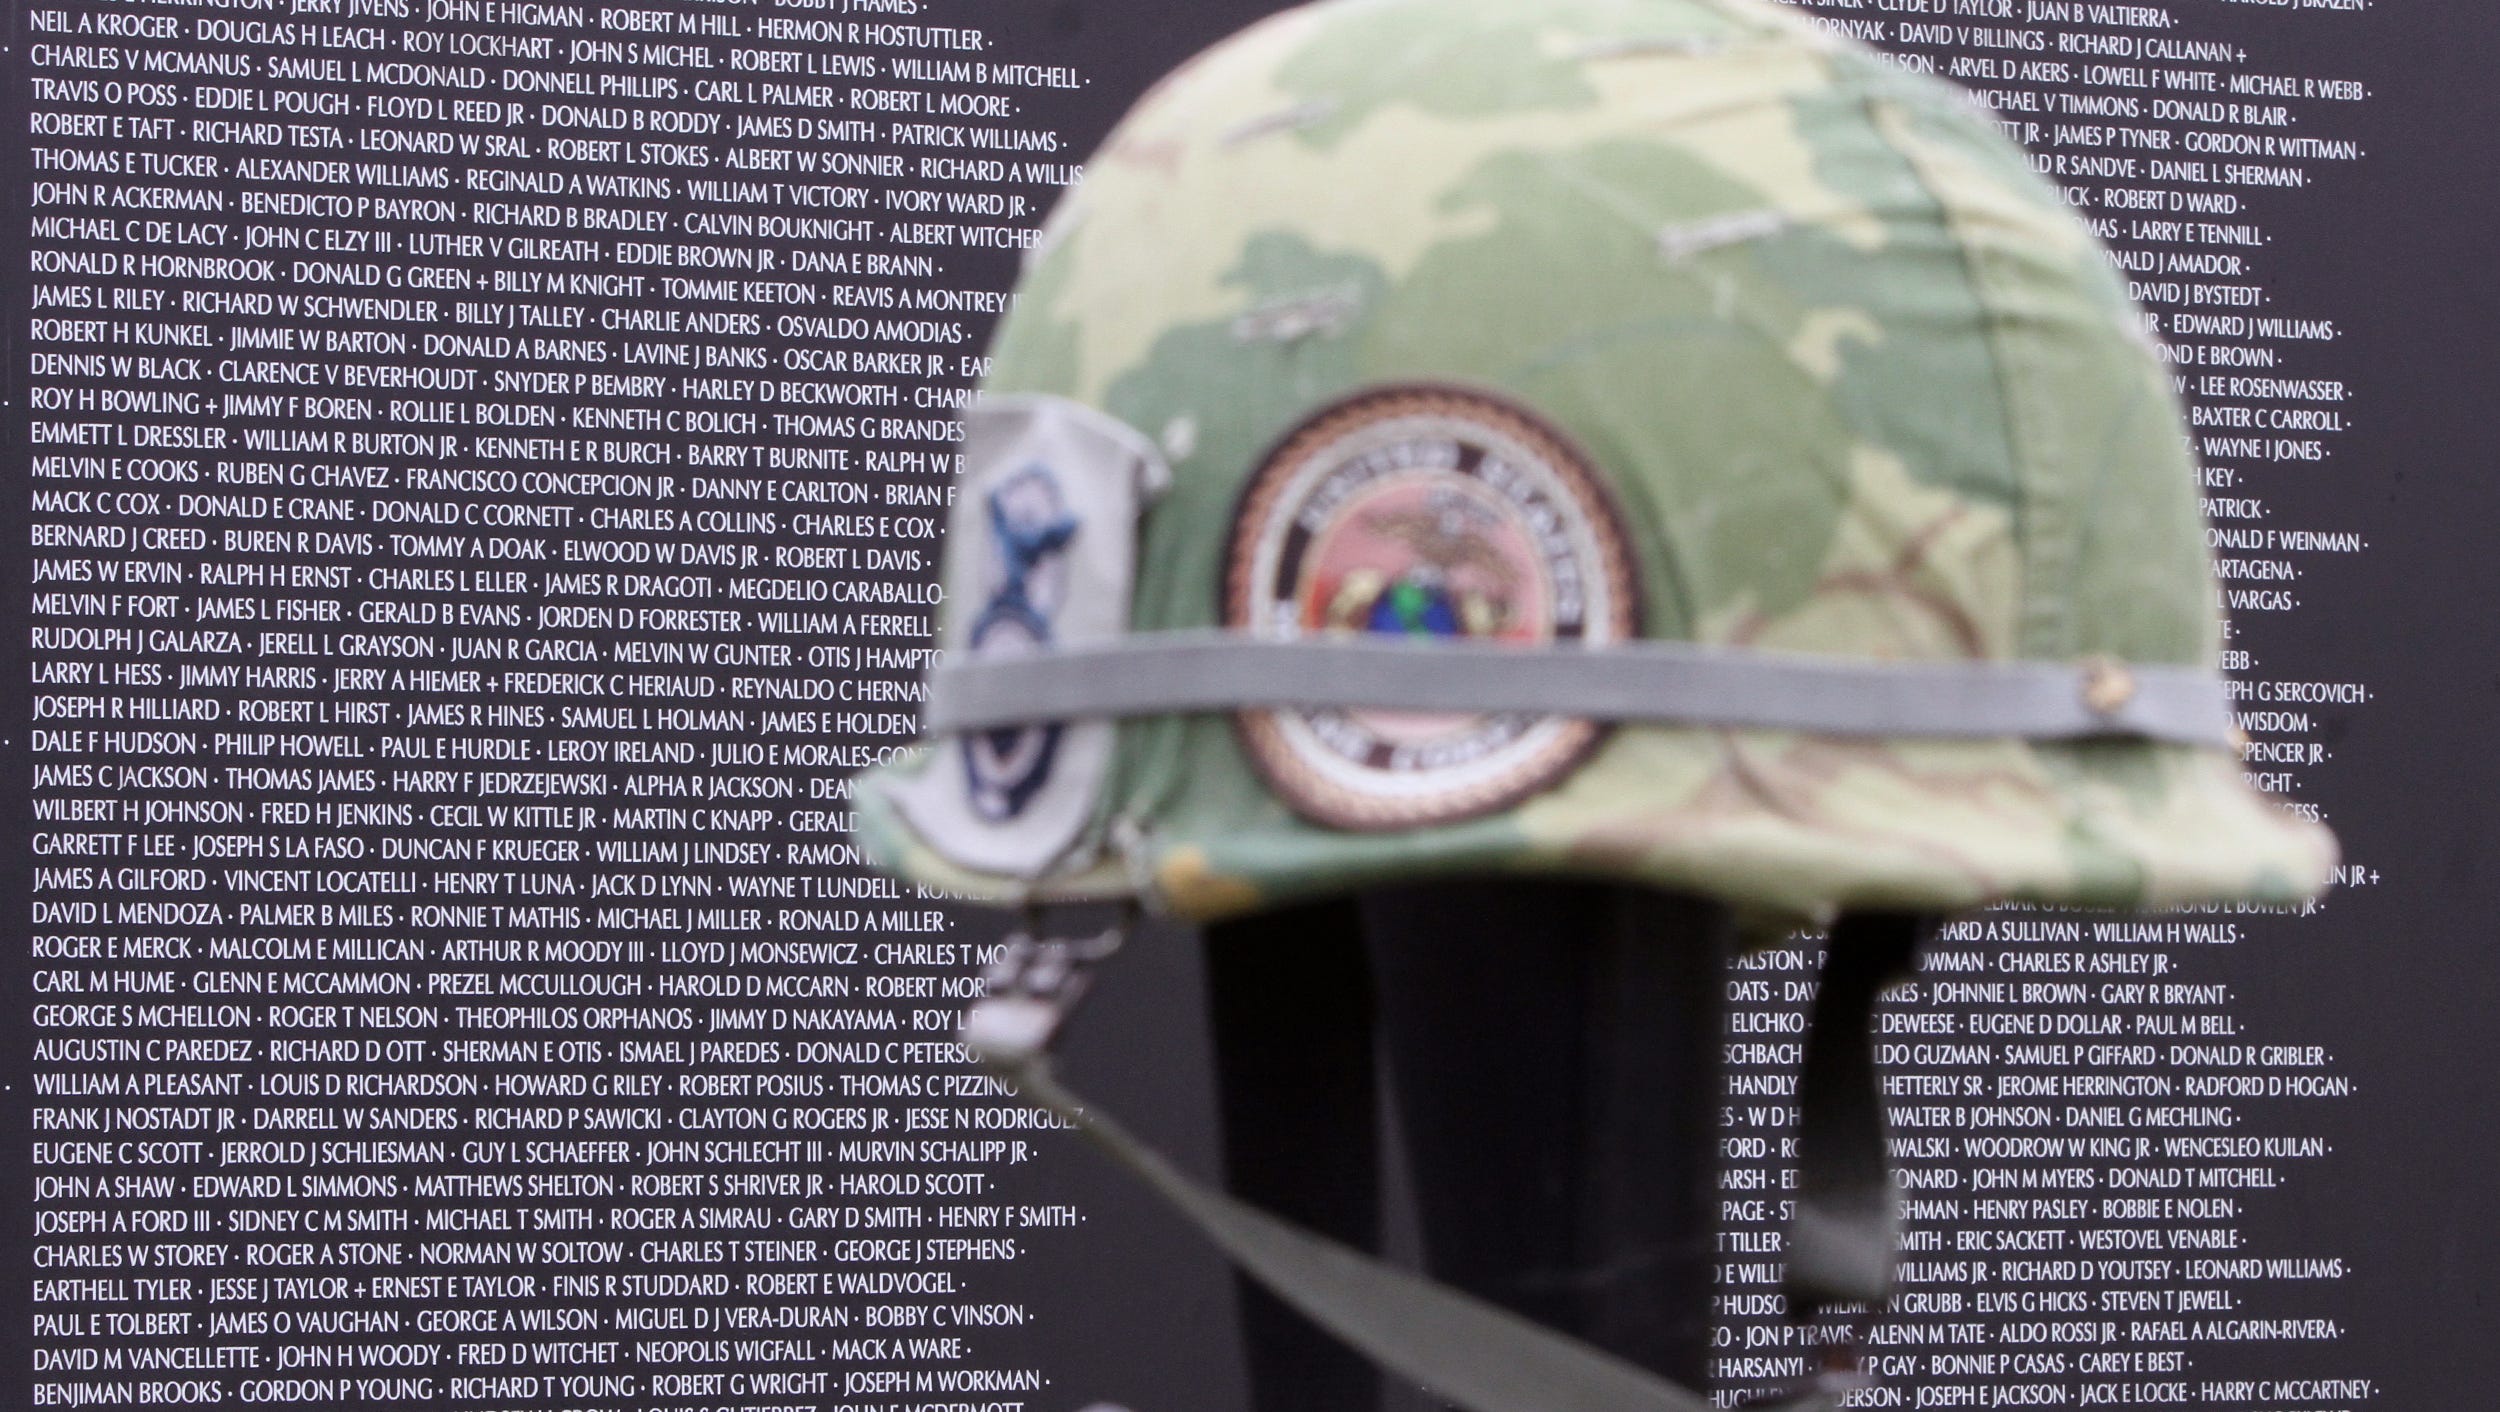 American Veterans Traveling Tribute coming to East Brunswick for Memorial Day